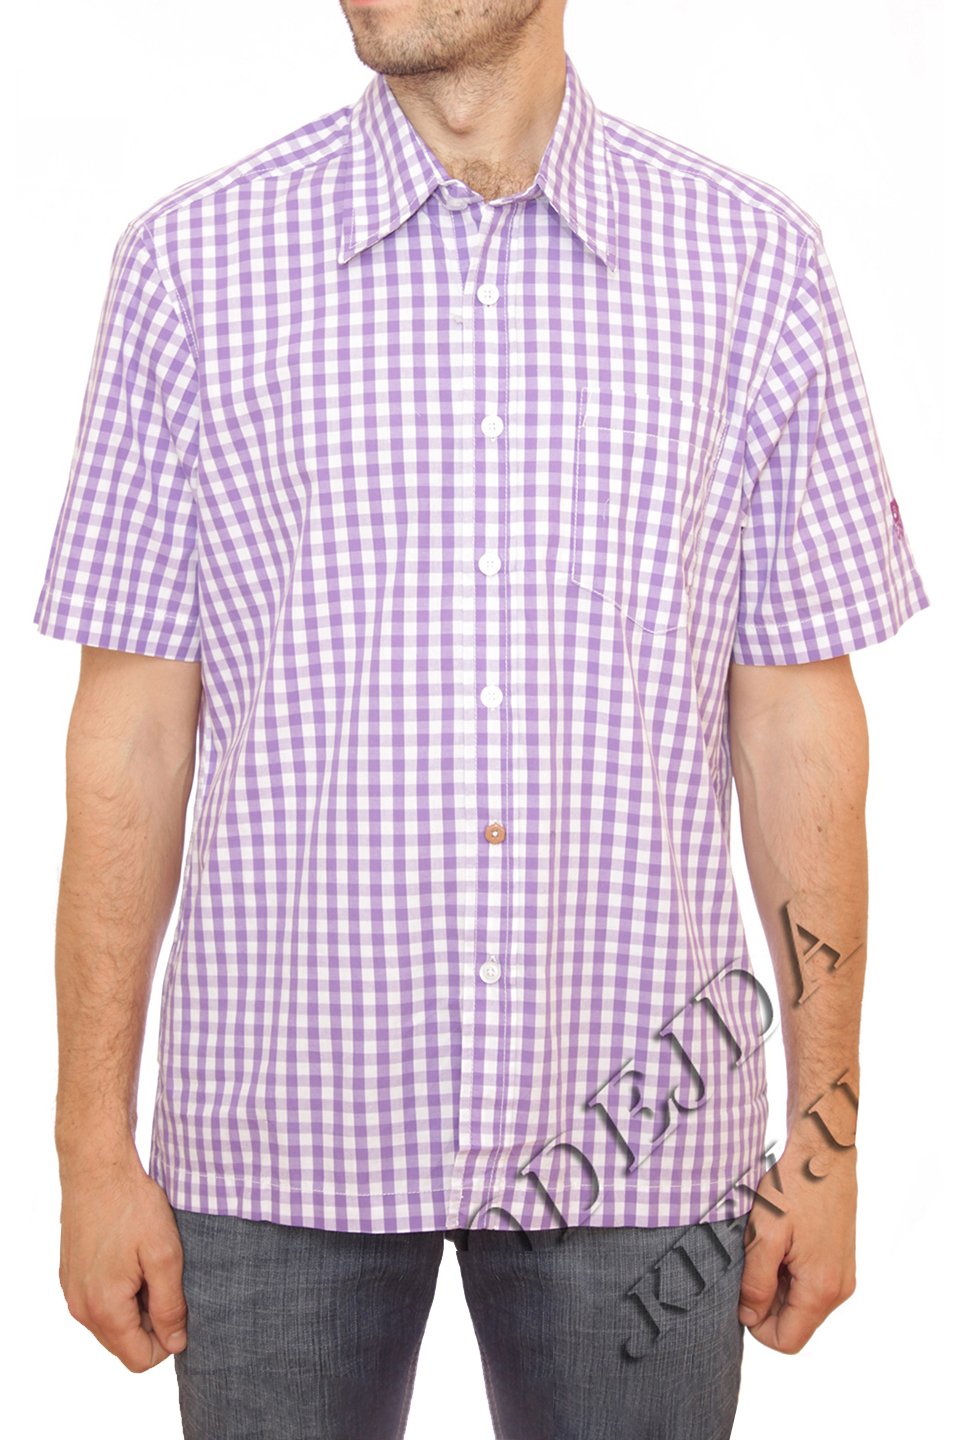 Рубашка с коротким рукавом Mountain Hardwear мужская в клетку - MH-801